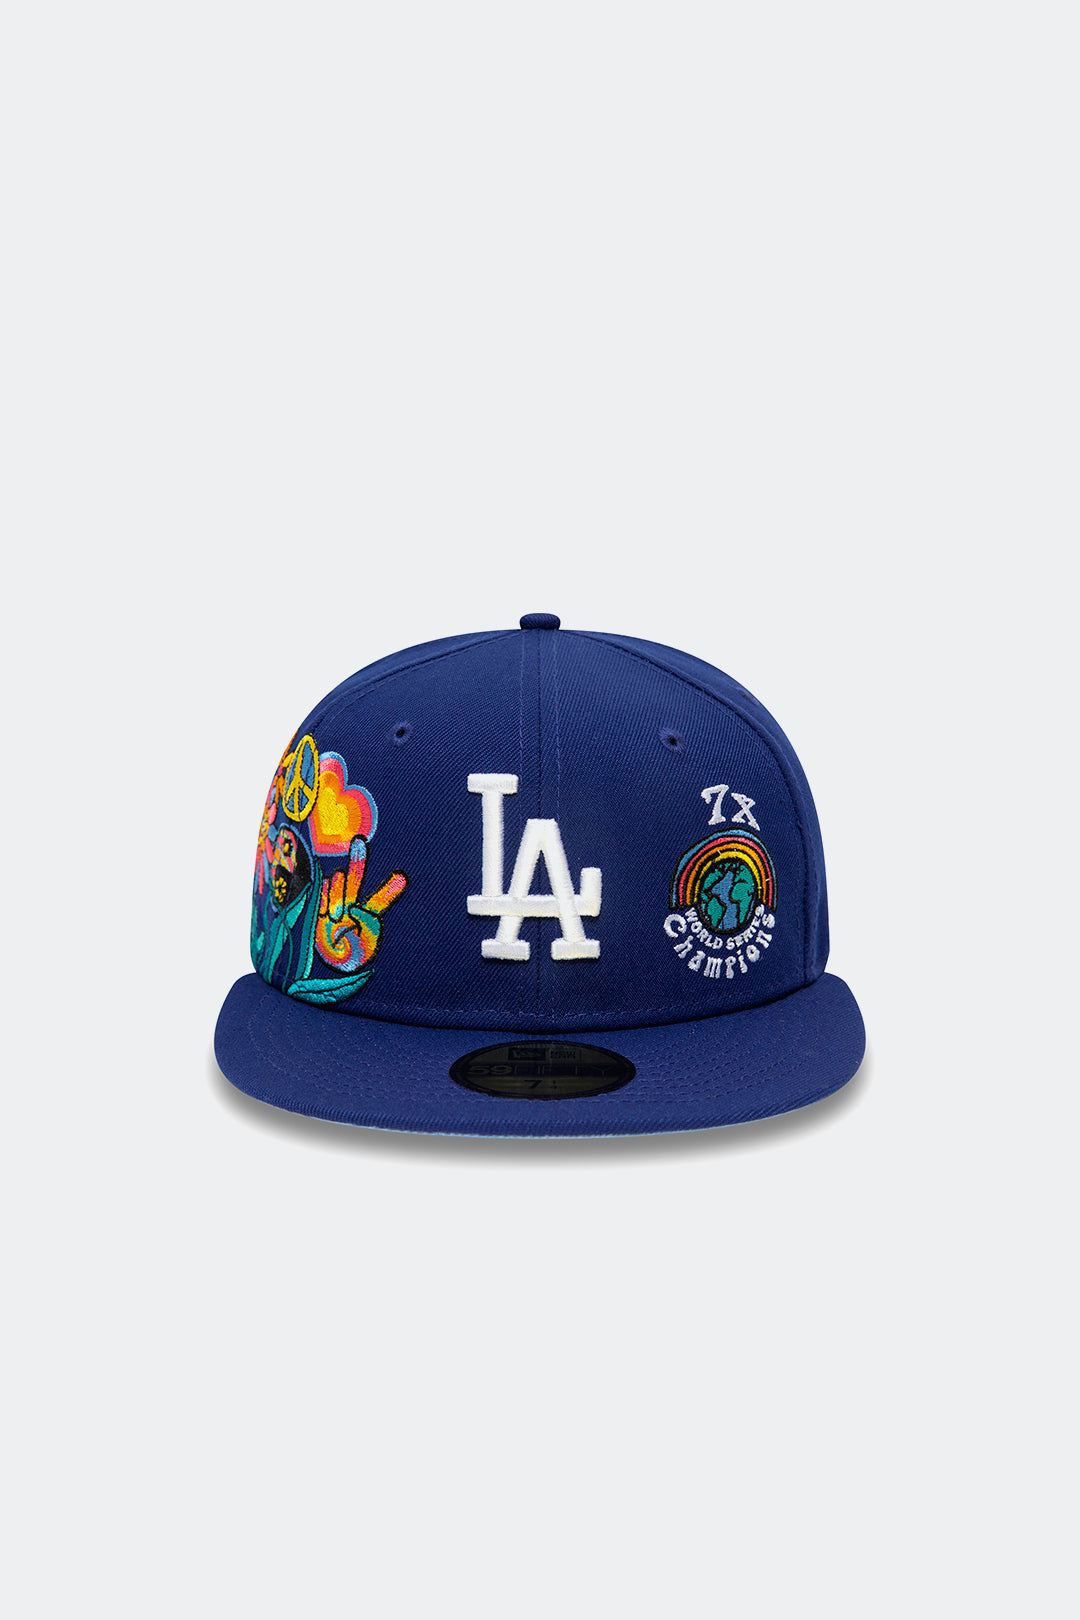 Gorra Los Angeles Dodgers MLB MLB Swirl 59Fifty Cerrada Azul Oscuro New Era  - New Era Colombia